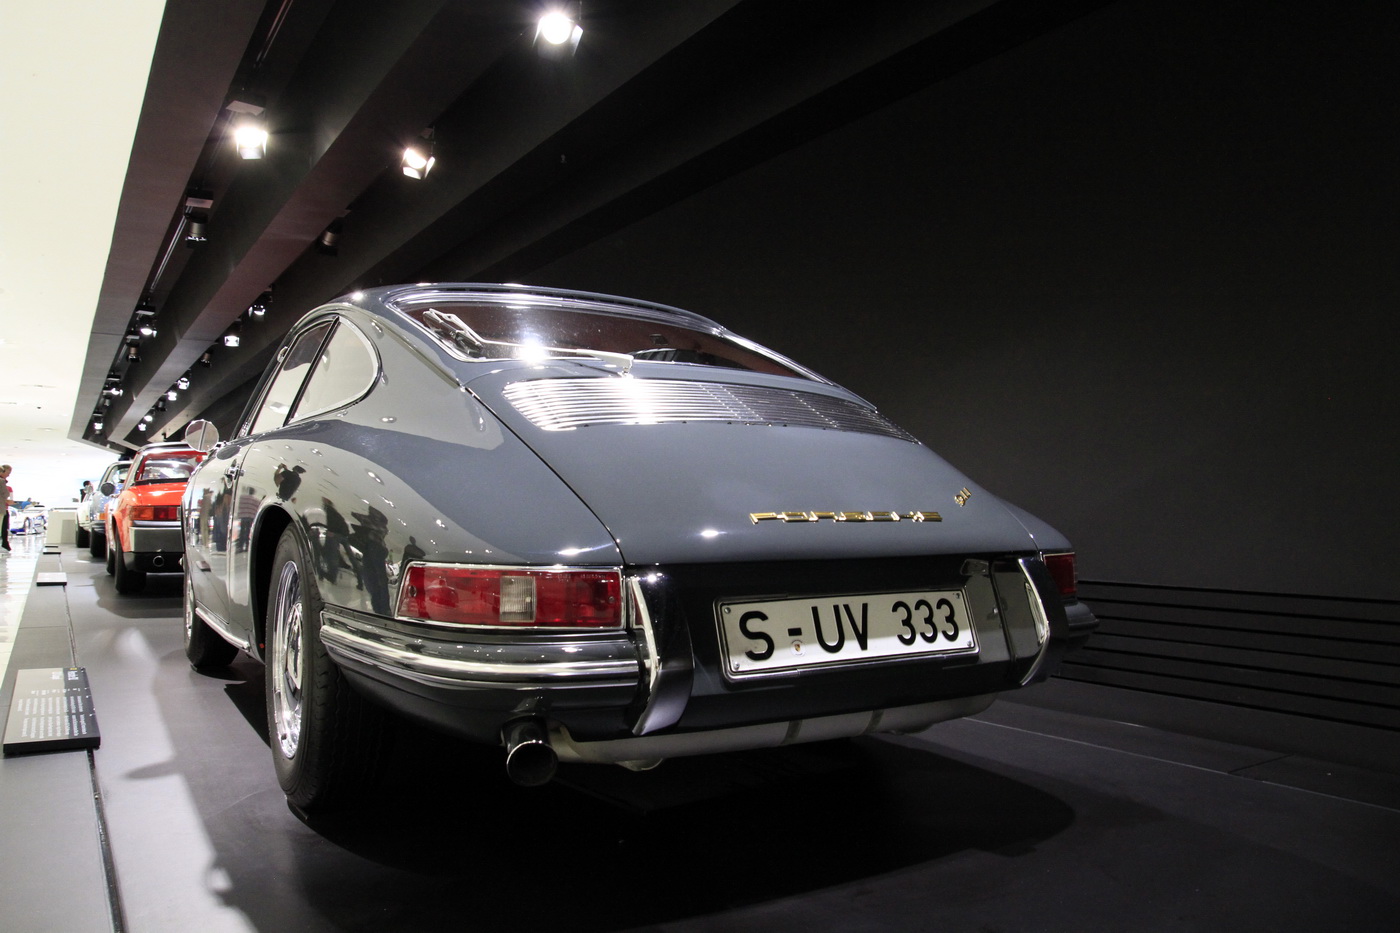 Porsche-Museum-010